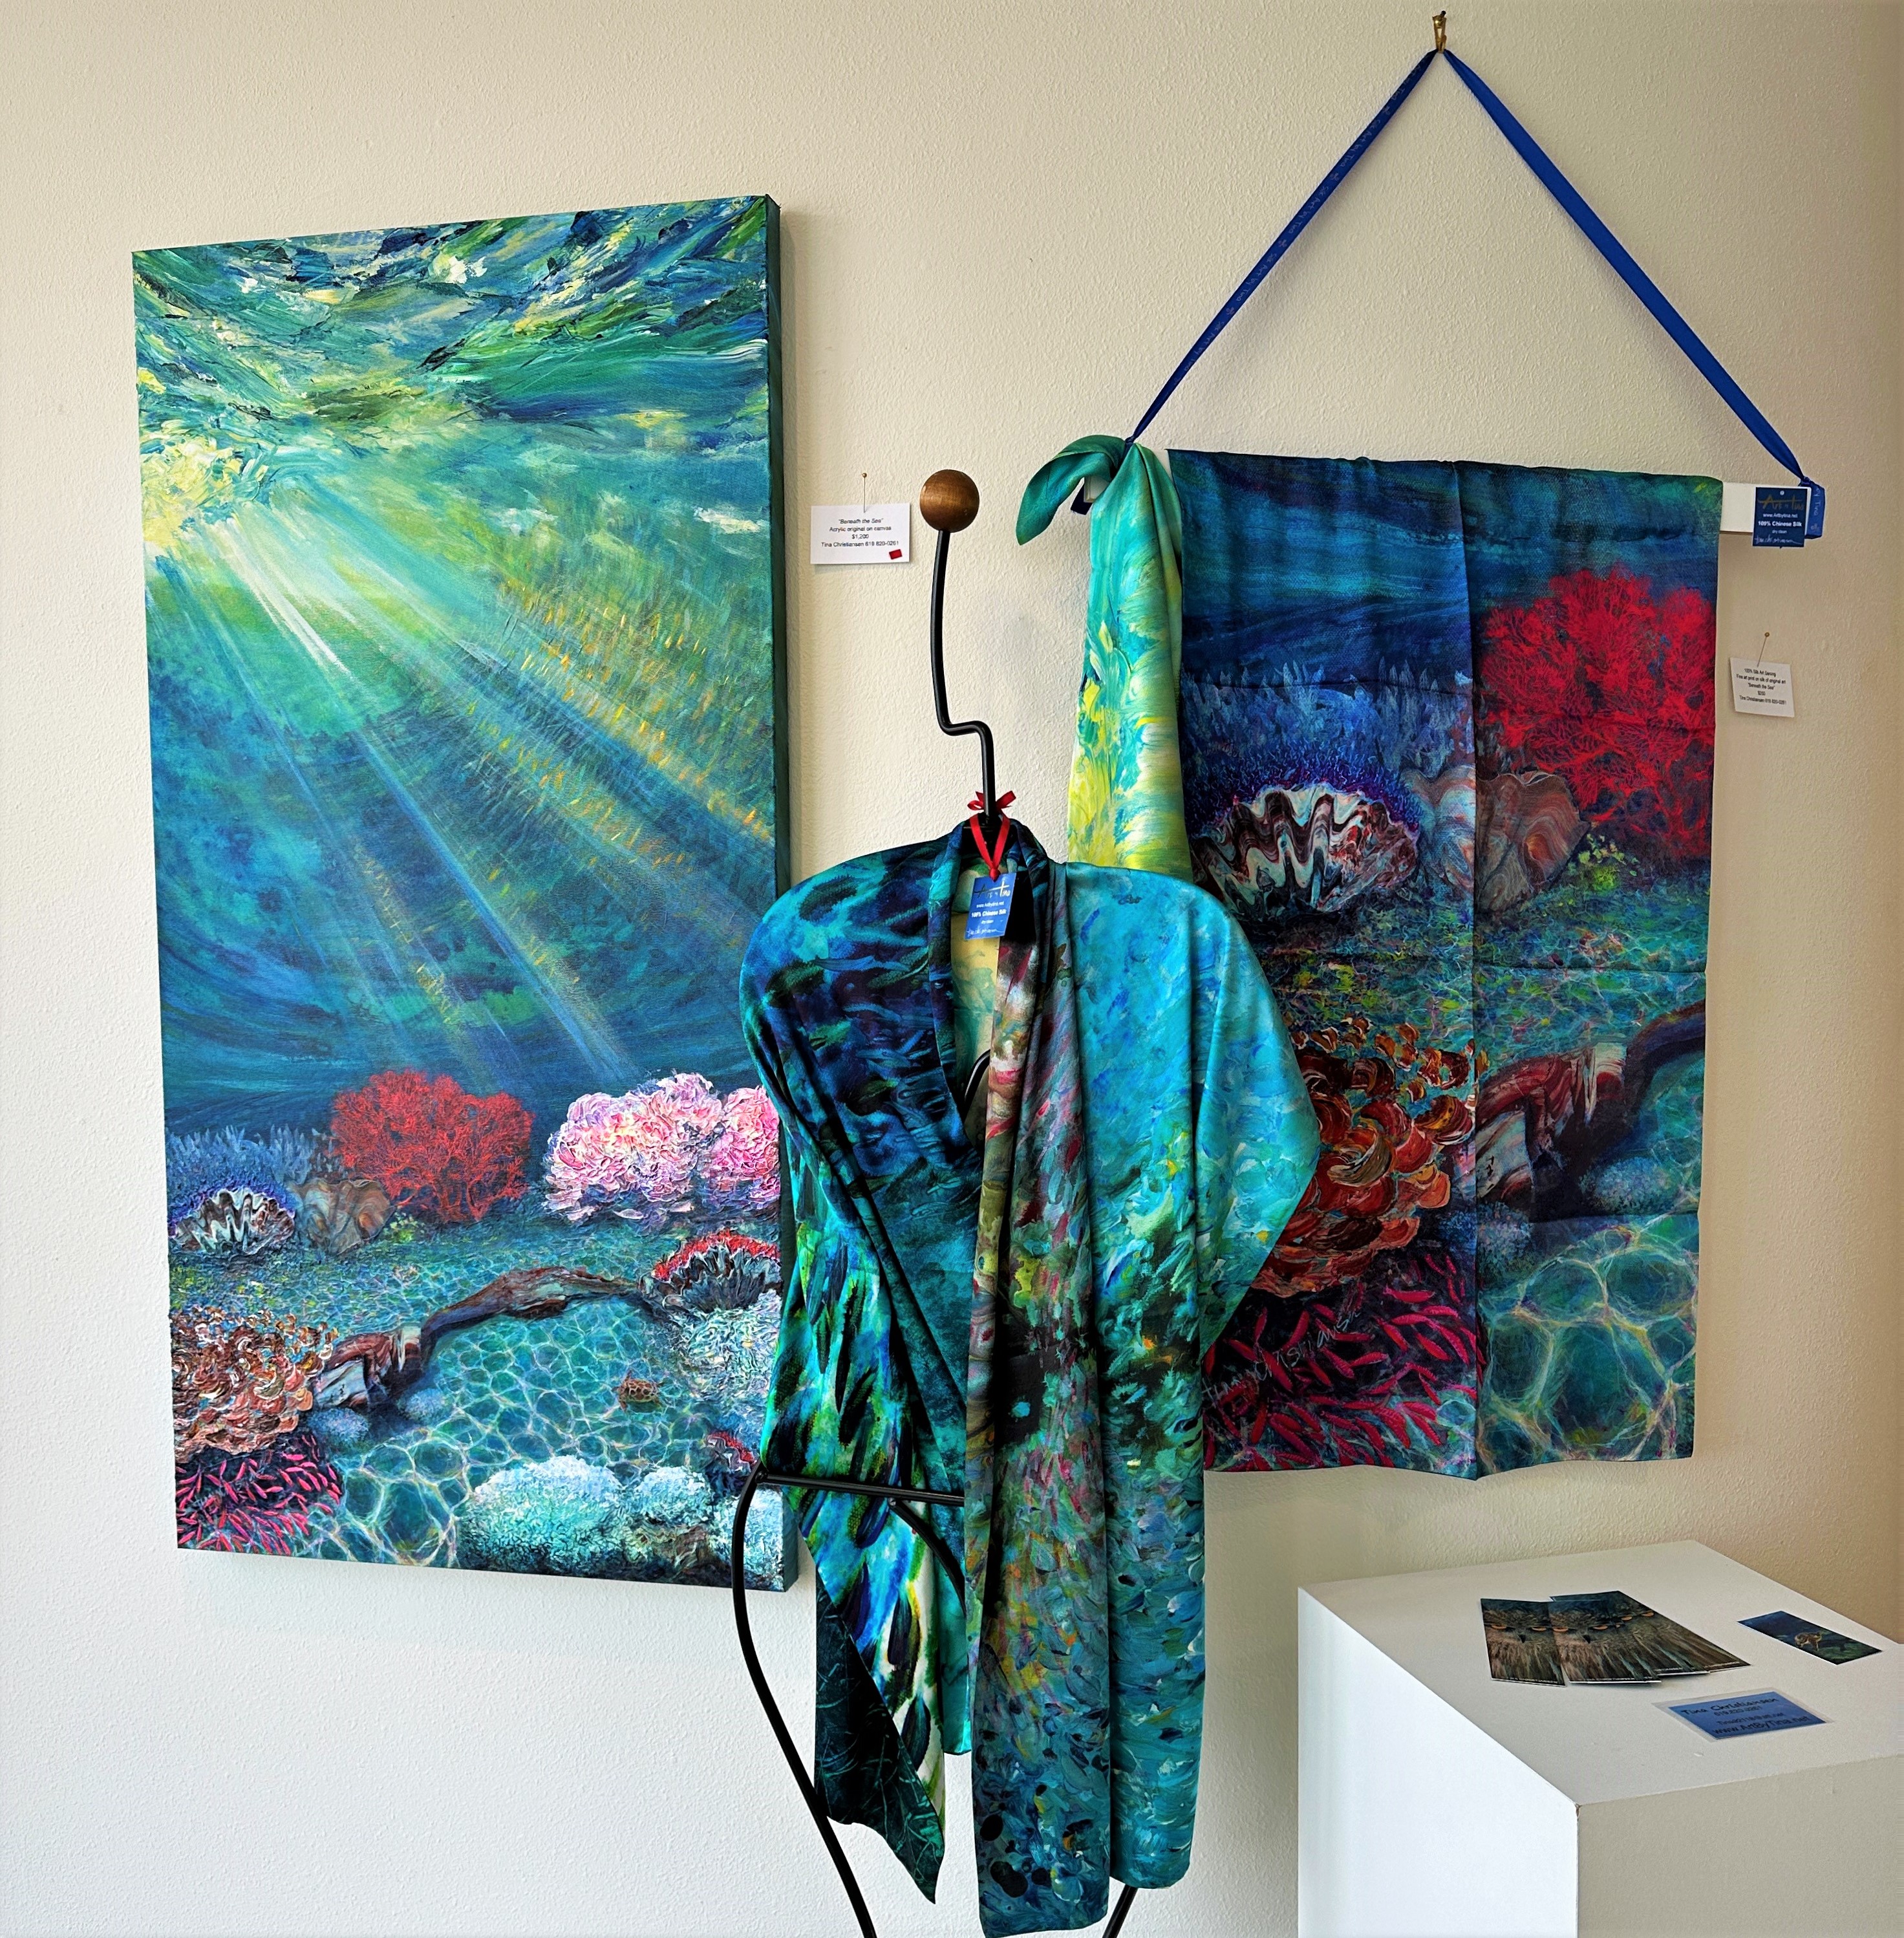 New City Hall Gallery Exhibit: "Art that Sings in Silk"